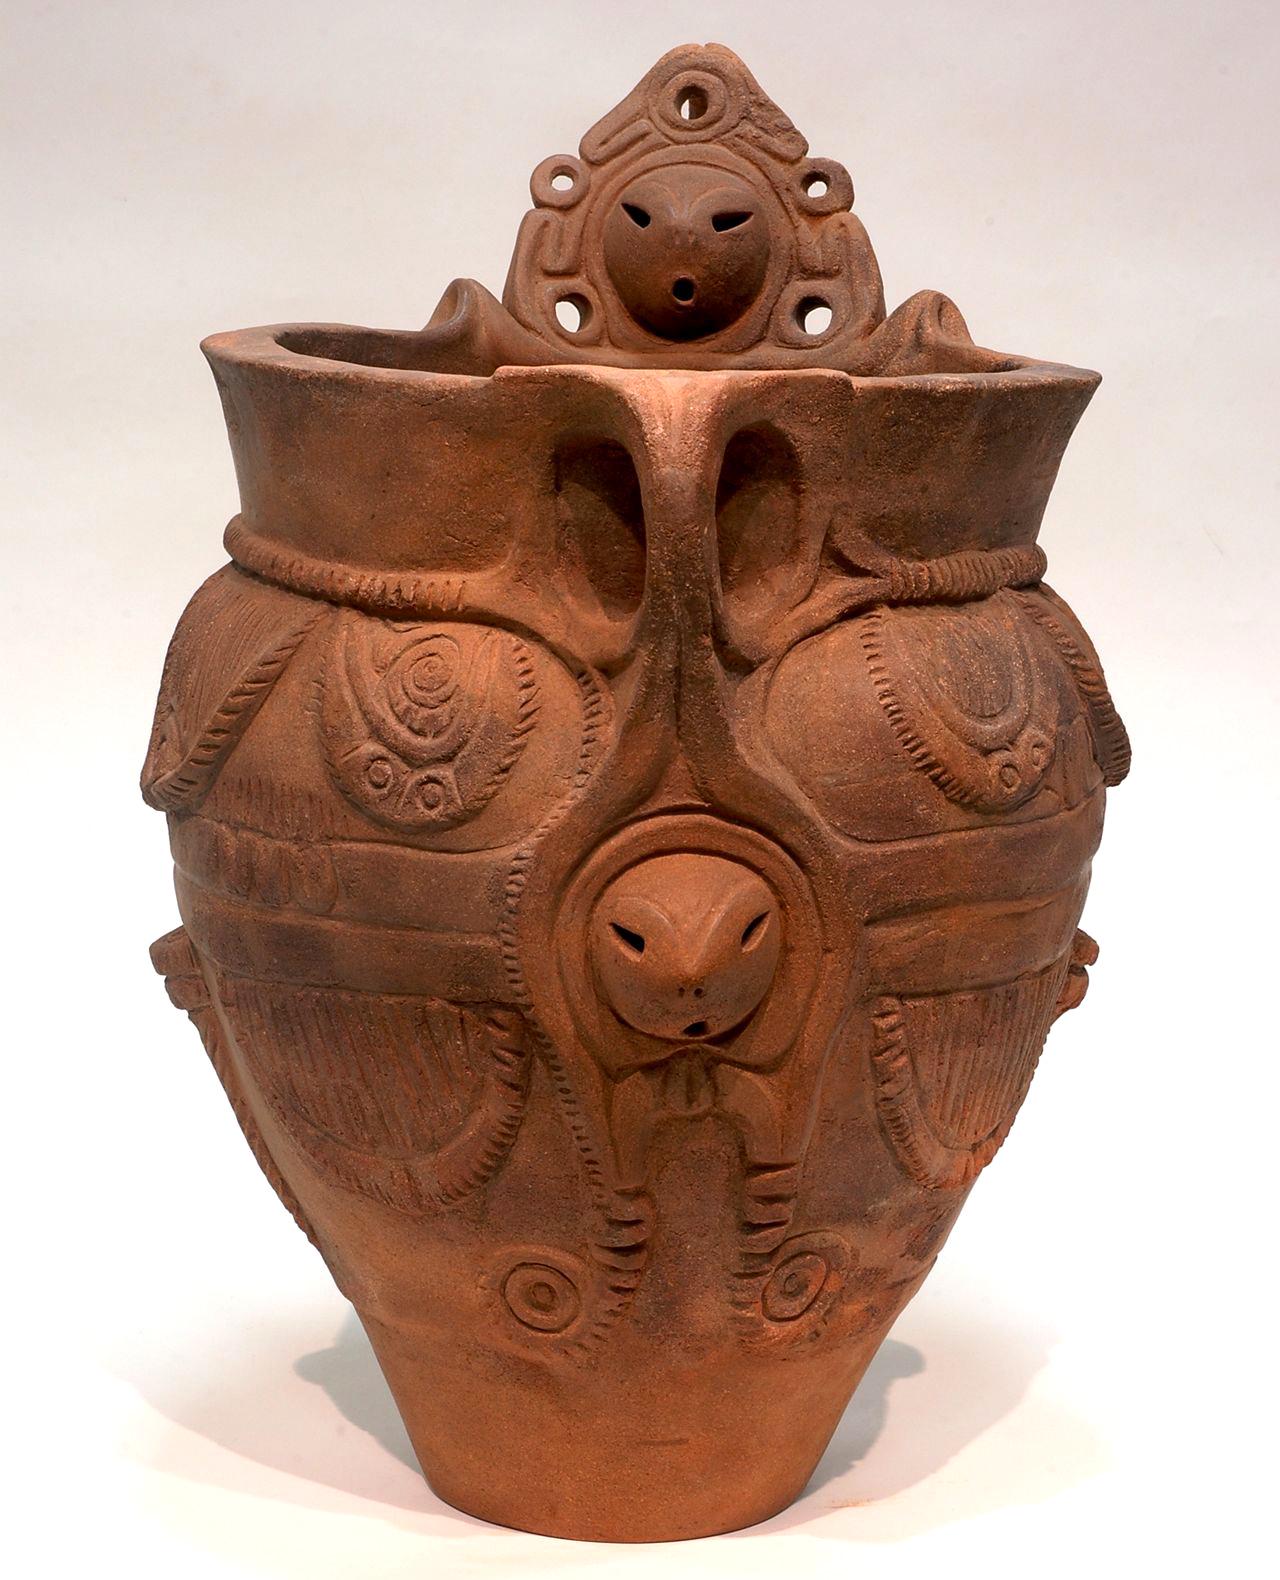 Pot depicting a woman giving birth. Yamanashi, Japan, Jōmon period, 3500-2500 BC.jpeg